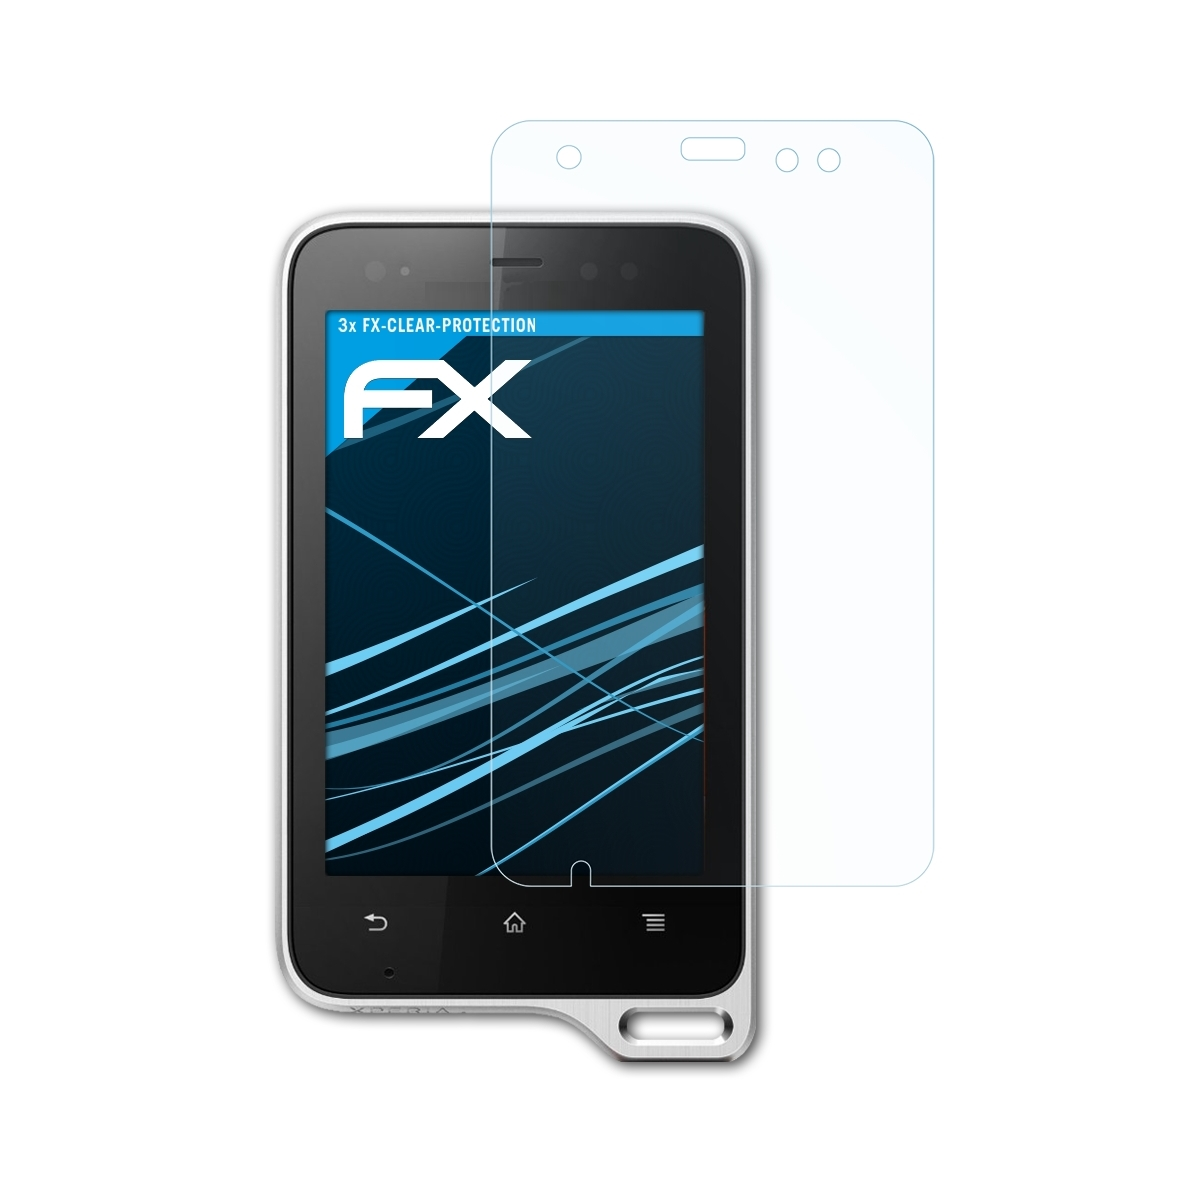 3x ATFOLIX Active) Sony-Ericsson Xperia Displayschutz(für FX-Clear